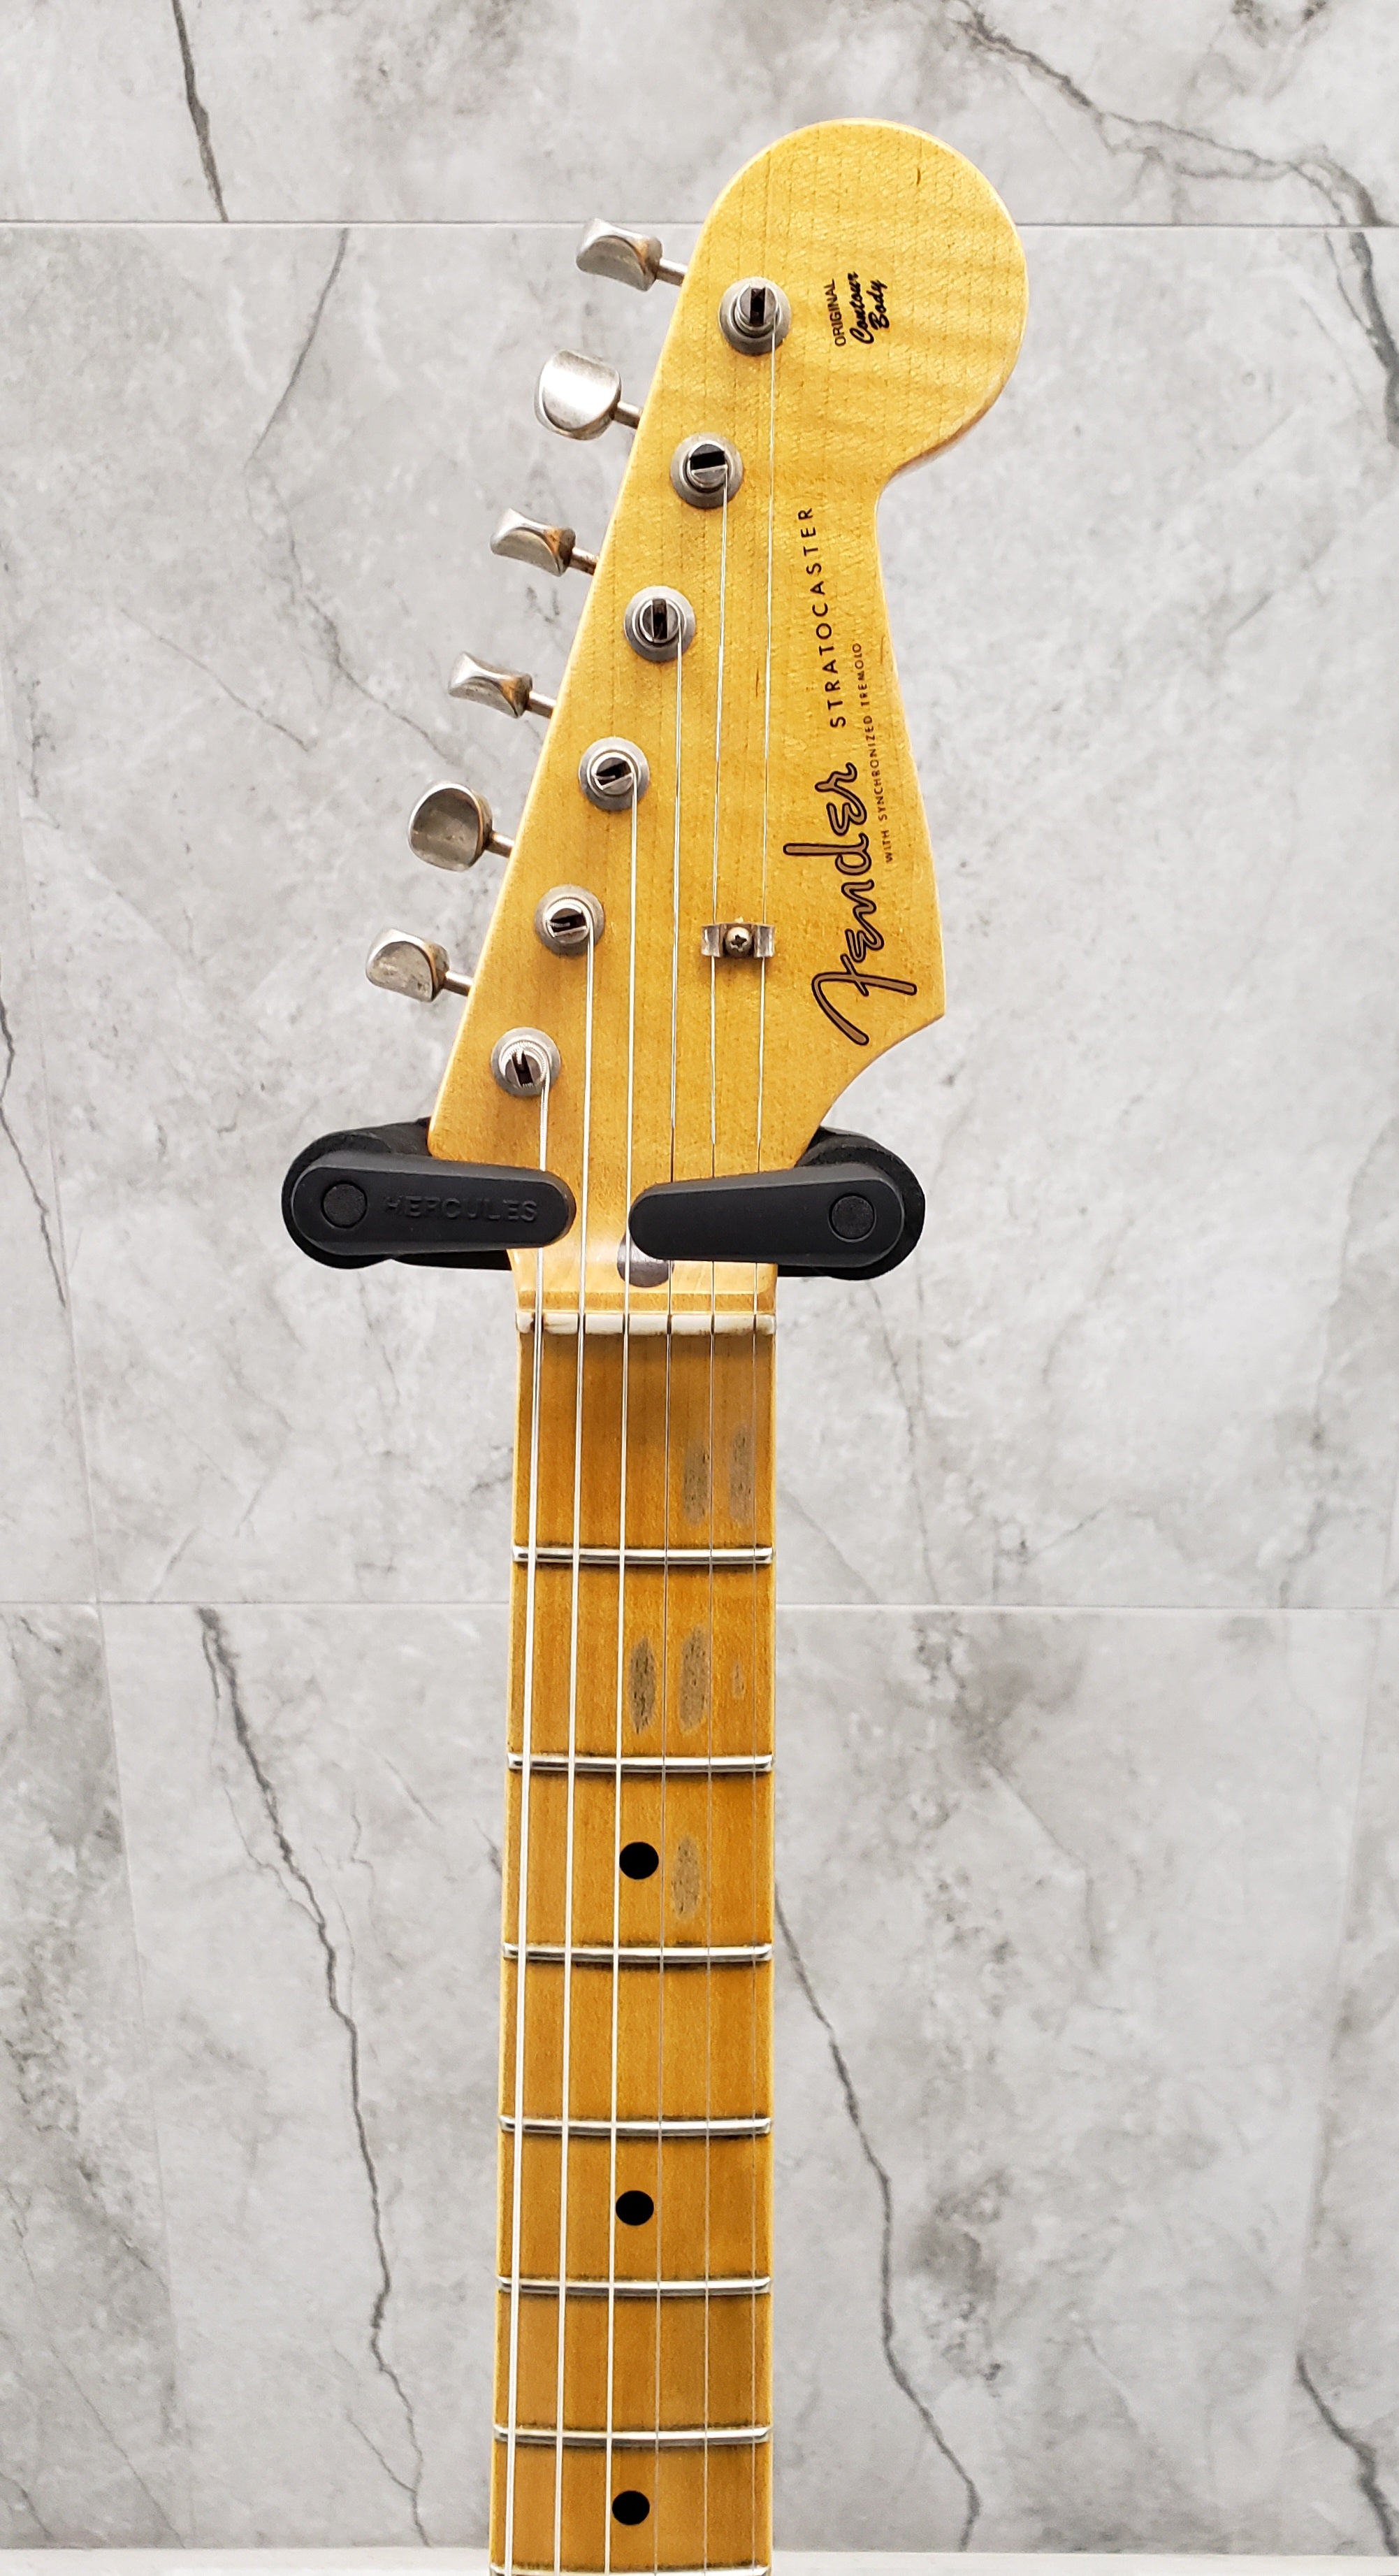 Fender Custom Shop 1957 Stratocaster Journeyman Relic Aged Blue Sparkle 9230010813 - Serial Number - R83429 - 7.4 LBS